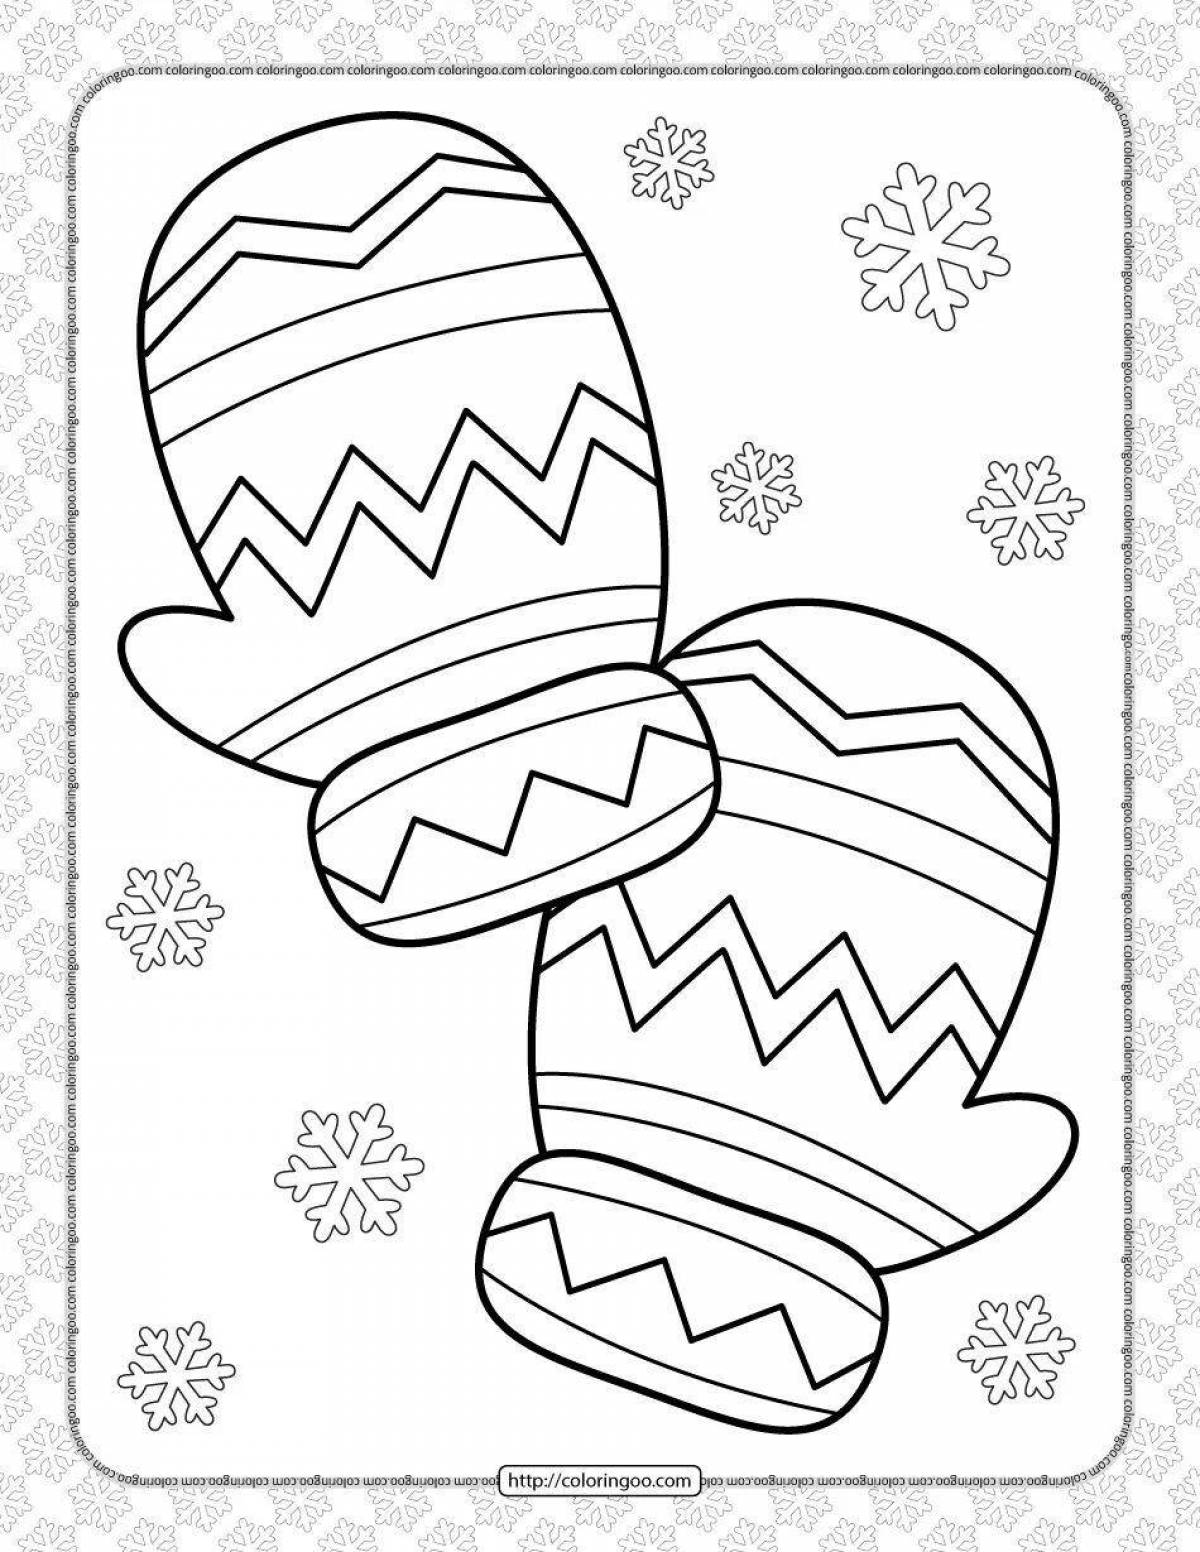 Coloring luminous patterned mitten